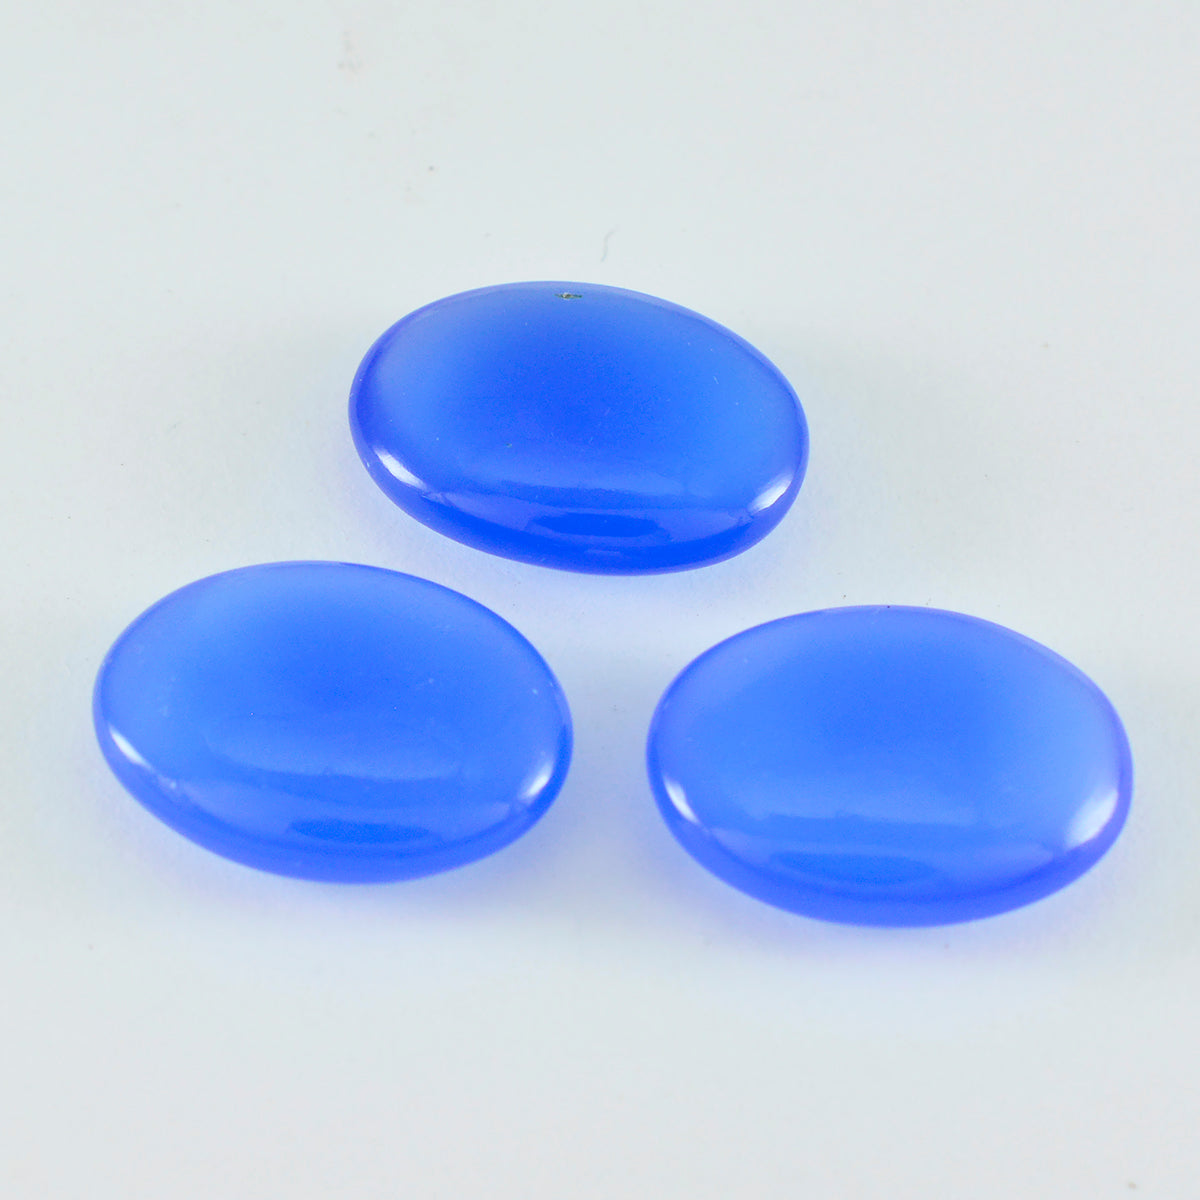 Riyogems 1PC Blue Chalcedony Cabochon 10x14 mm Oval Shape amazing Quality Gems